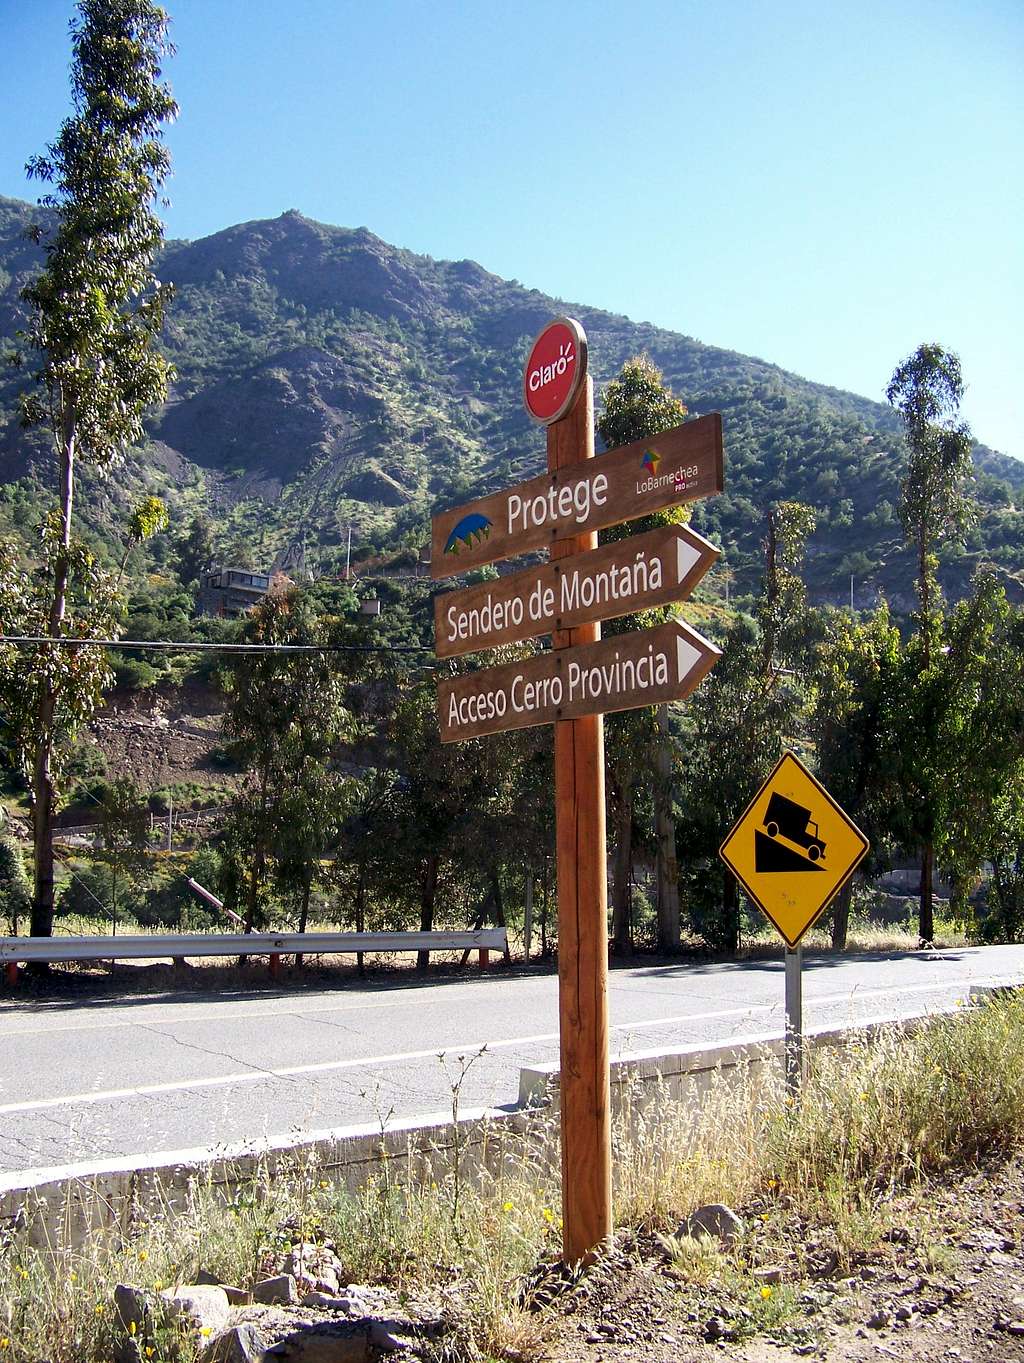 Signs showing the trailhead to Cerro Provincia